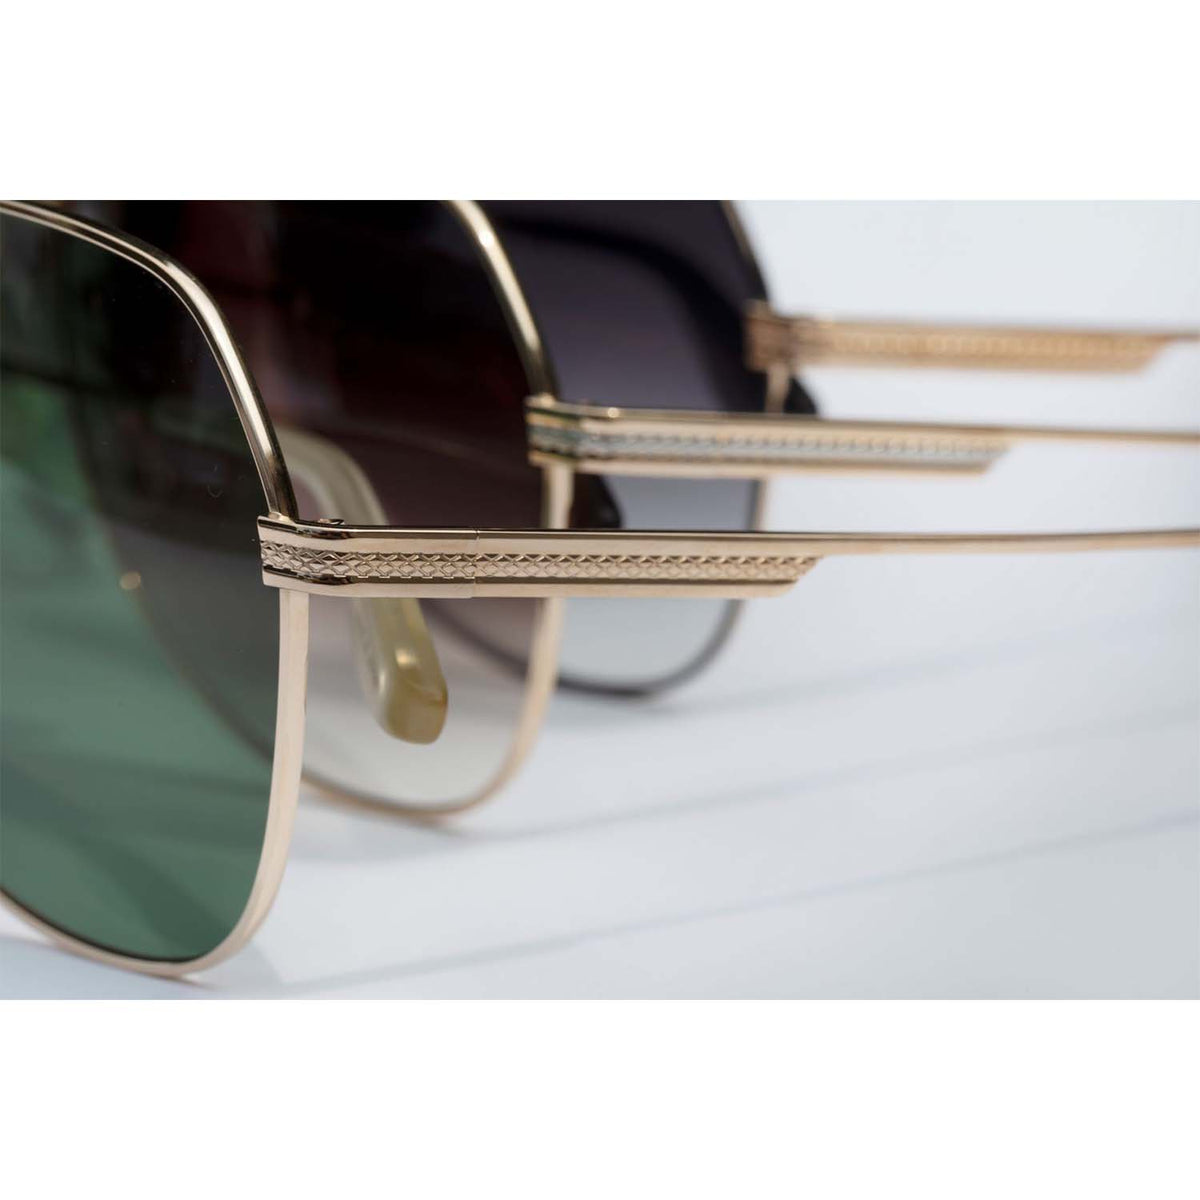 007 Avtak Sunglasses - Black Satin / Gold / Smolder Edition - By Barton Perreira (Pre-order) SUNGLASSSES Barton Perreira 